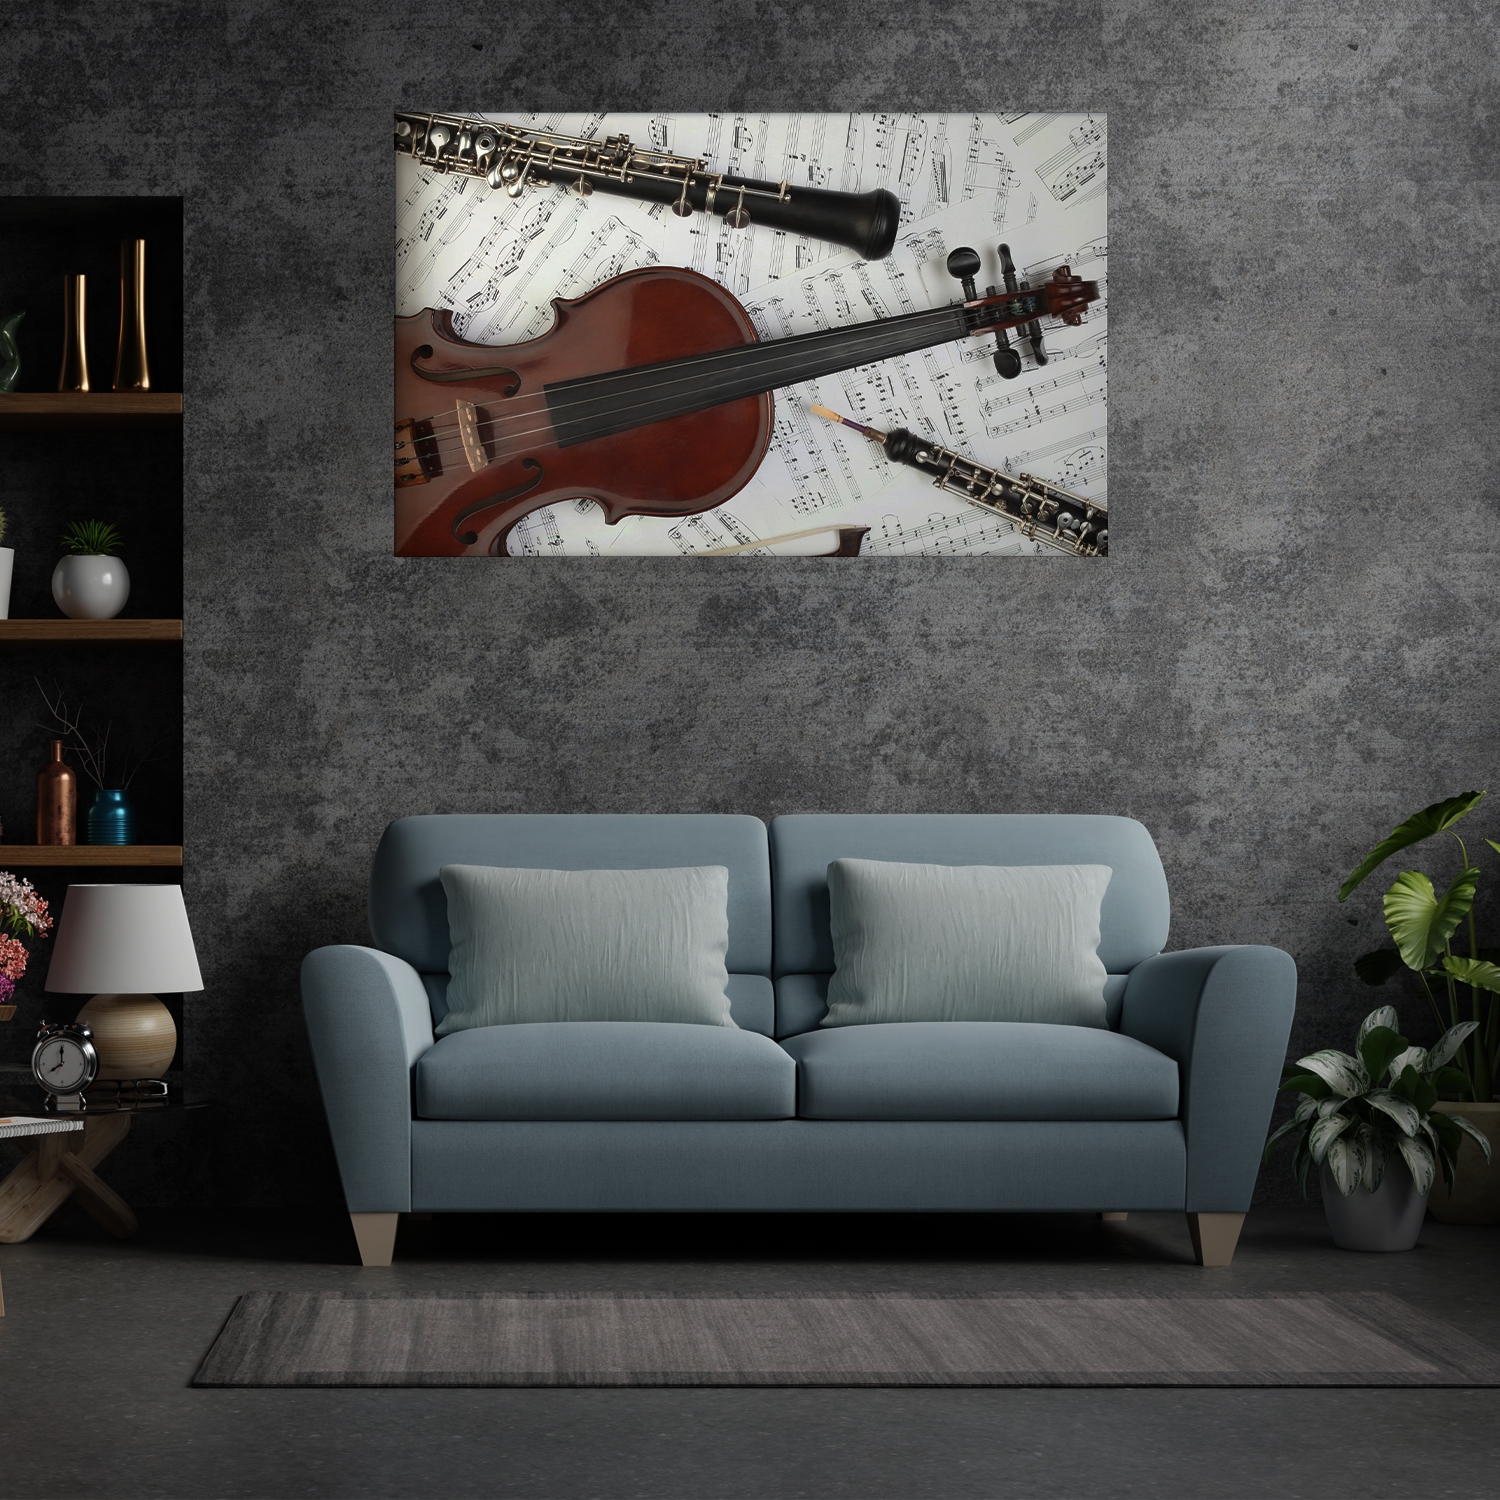 Tablou canvas Instrumente muzicale, CT0317, Picma, standard, panza + sasiu lemn, 40 x 60 cm